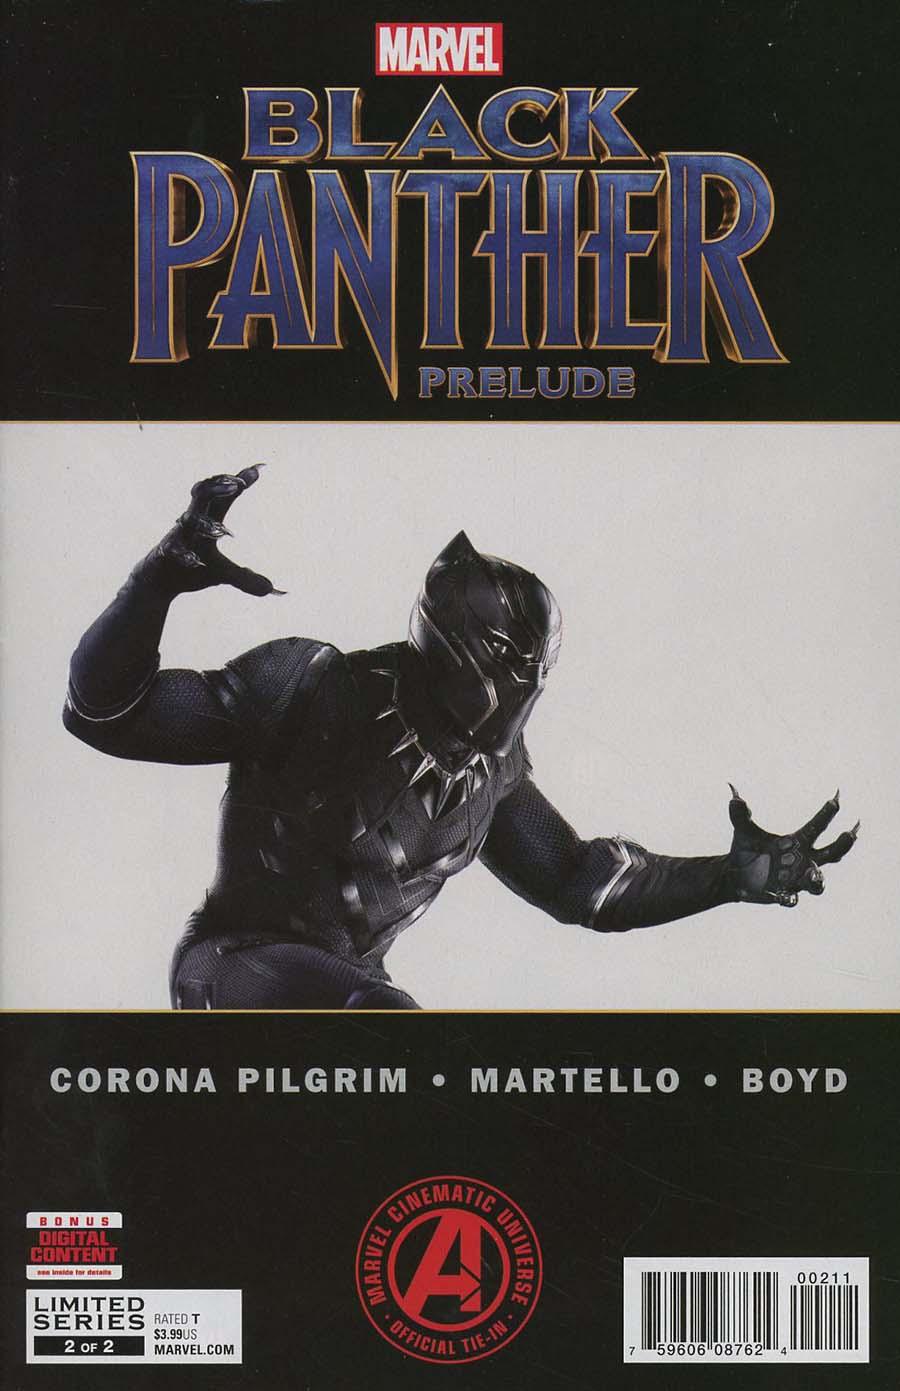 Marvels Black Panther Prelude Vol. 1 #2